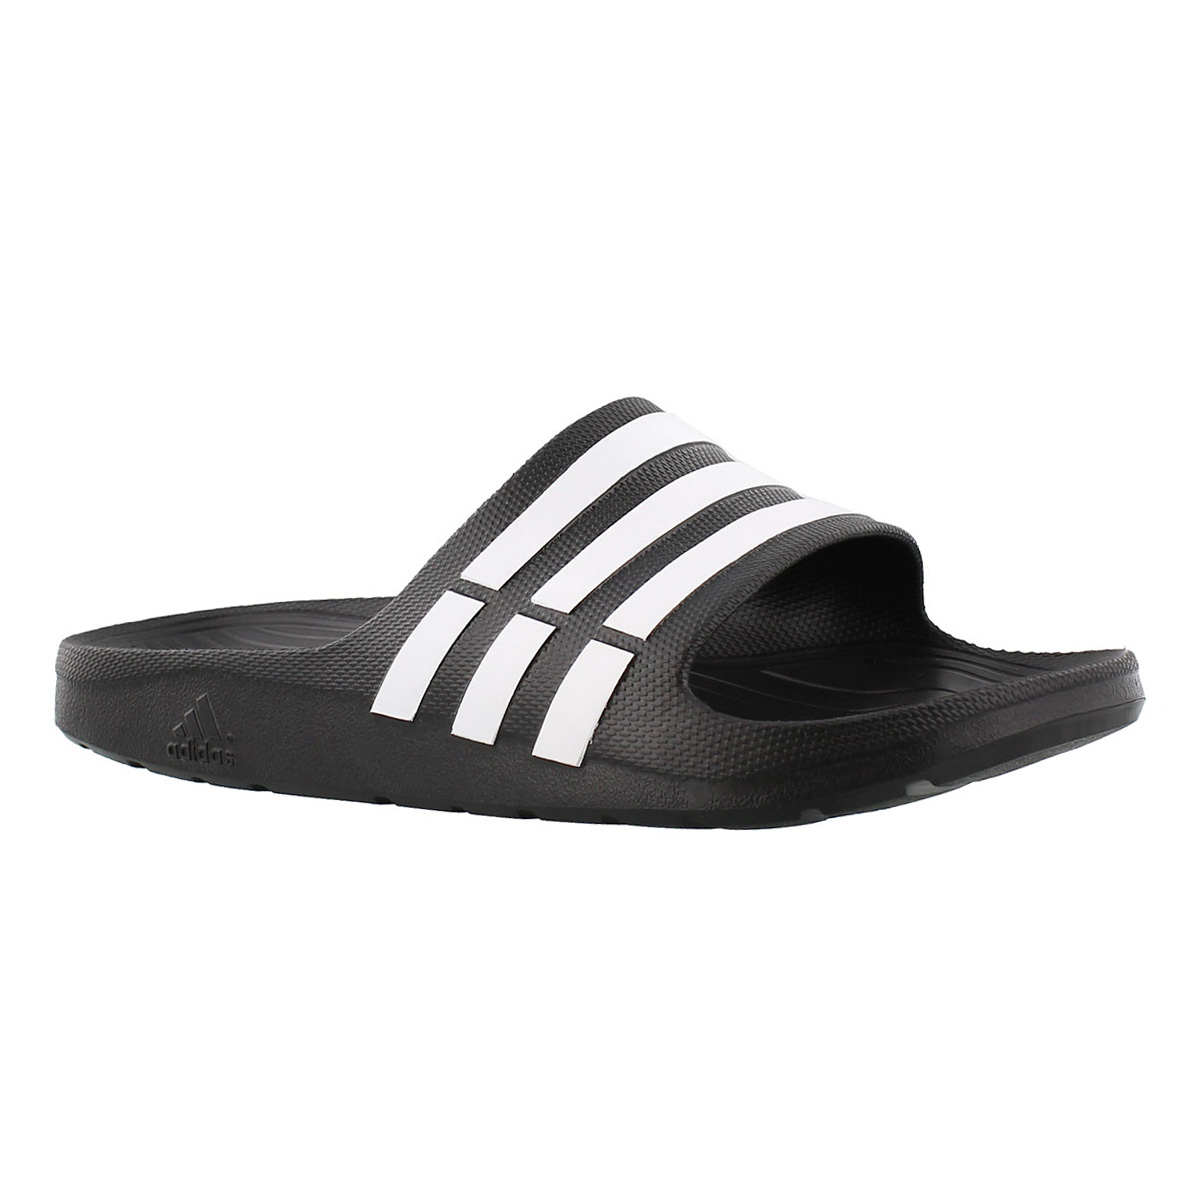 Adidas Men's DURAMO SLIDE black sandals G15890